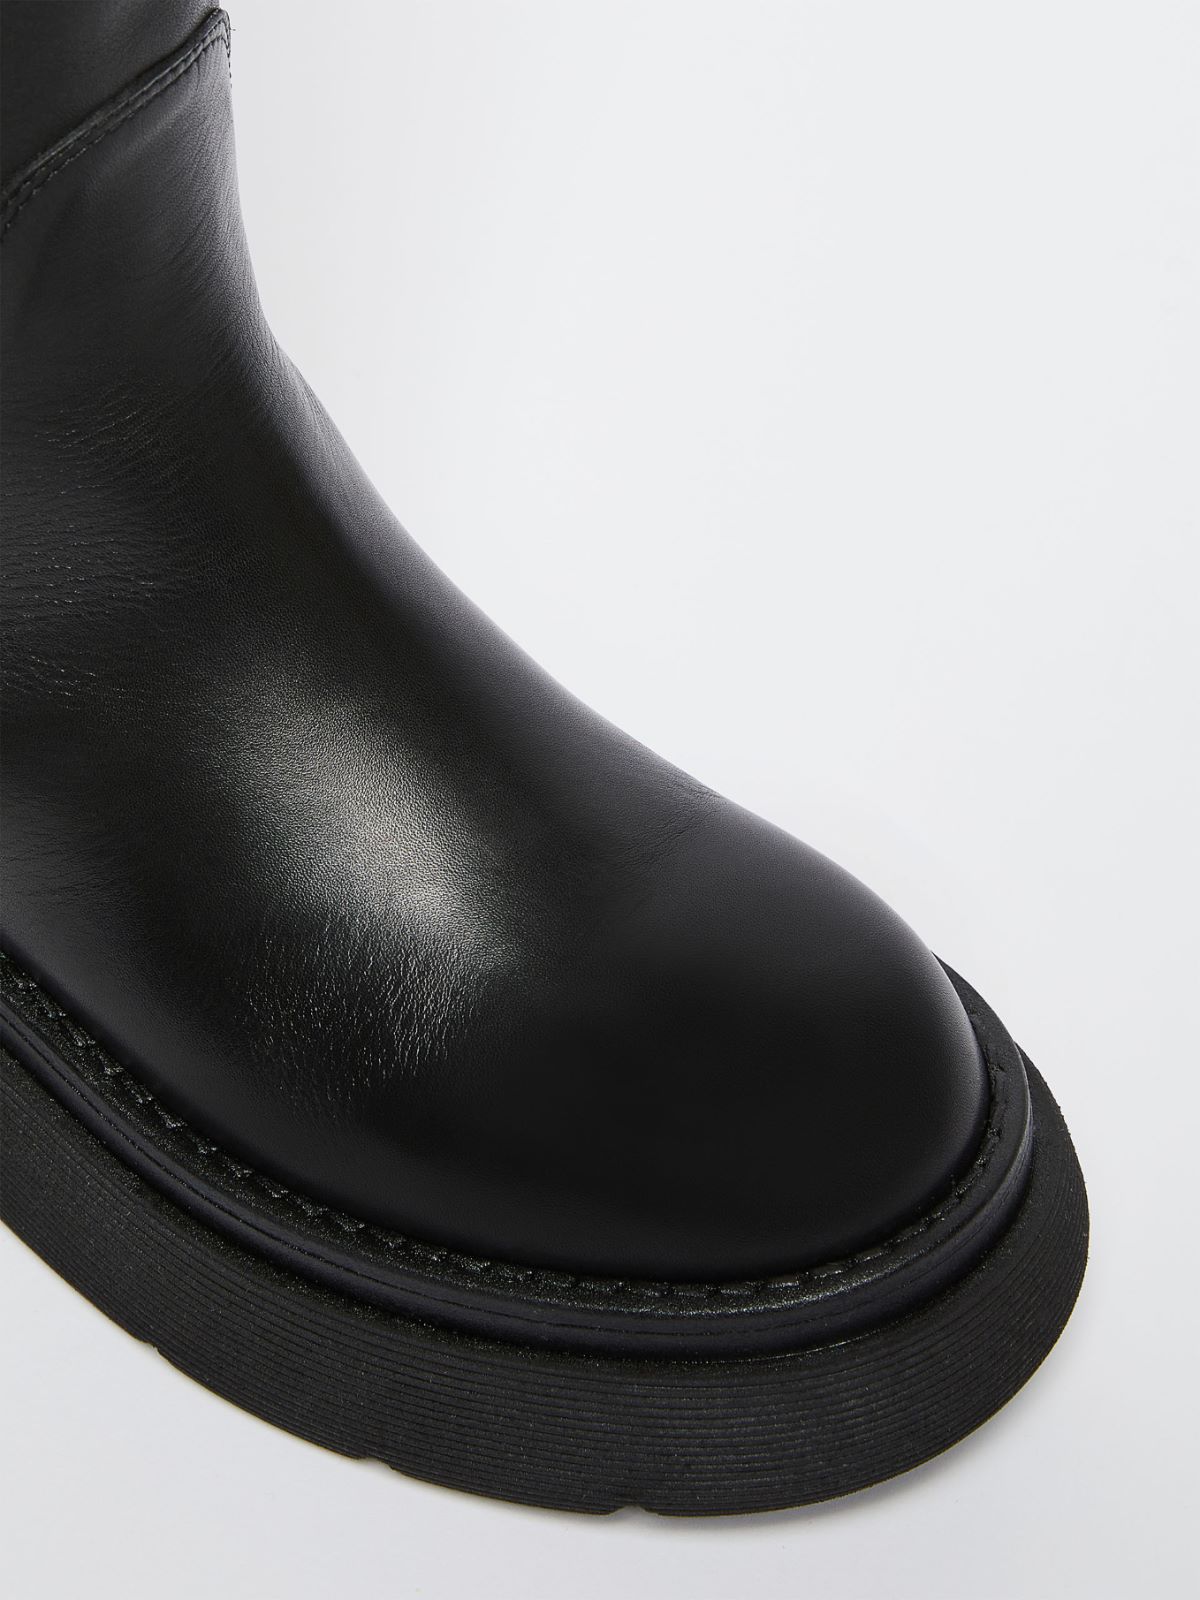 Leather boots - BLACK - Weekend Max Mara - 4